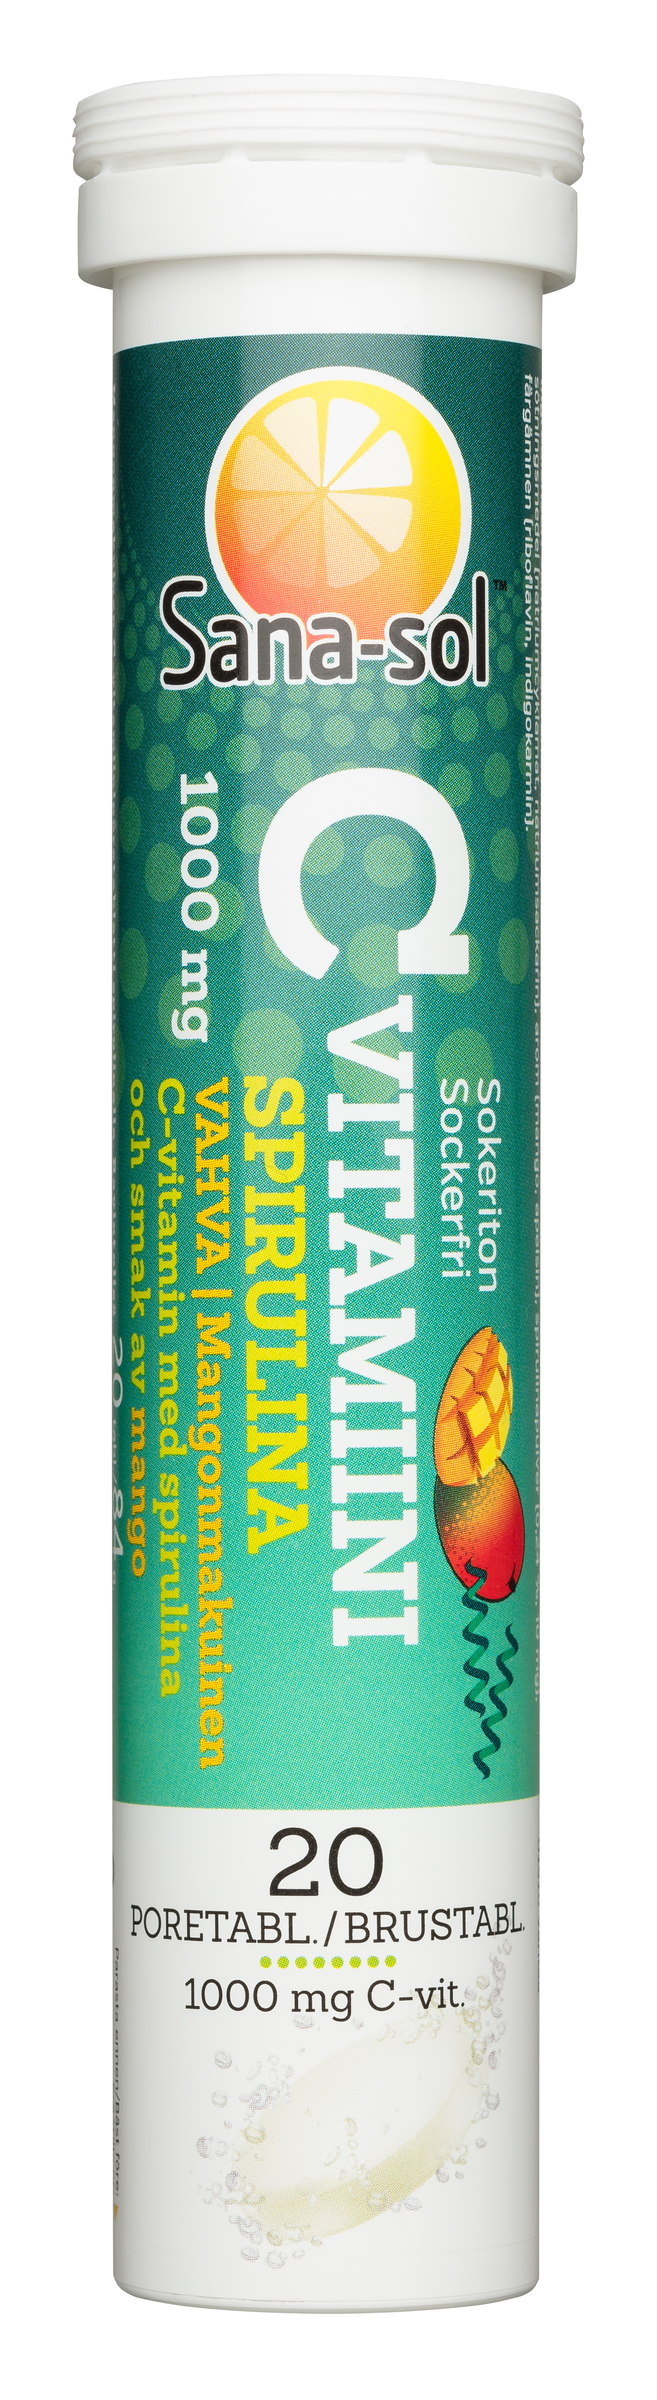 Sana-sol instant C-vitamin  spirulina-mango 20 pcs, 1000mg